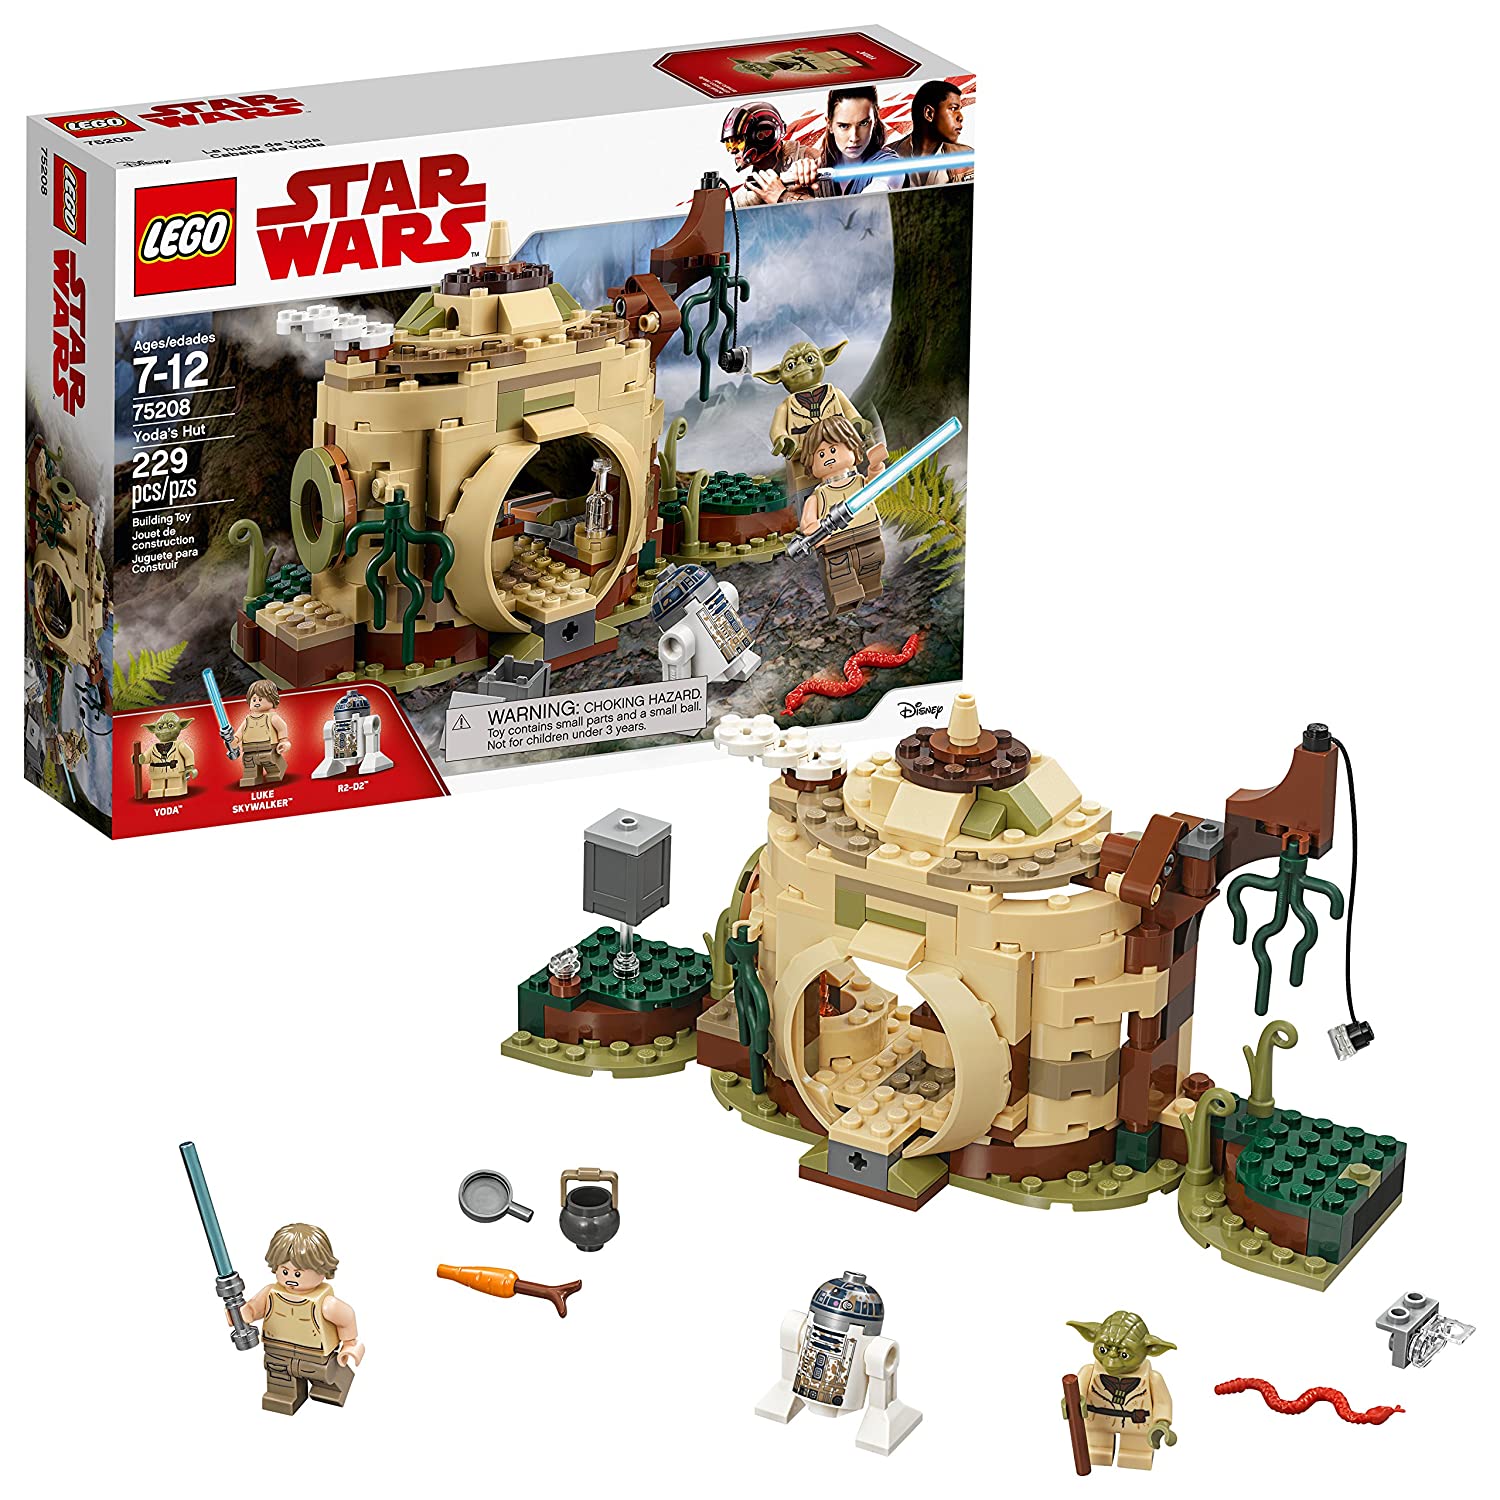 LEGO Star Wars: The Empire Strikes Back Yoda’s Hut 75208 Building Kit